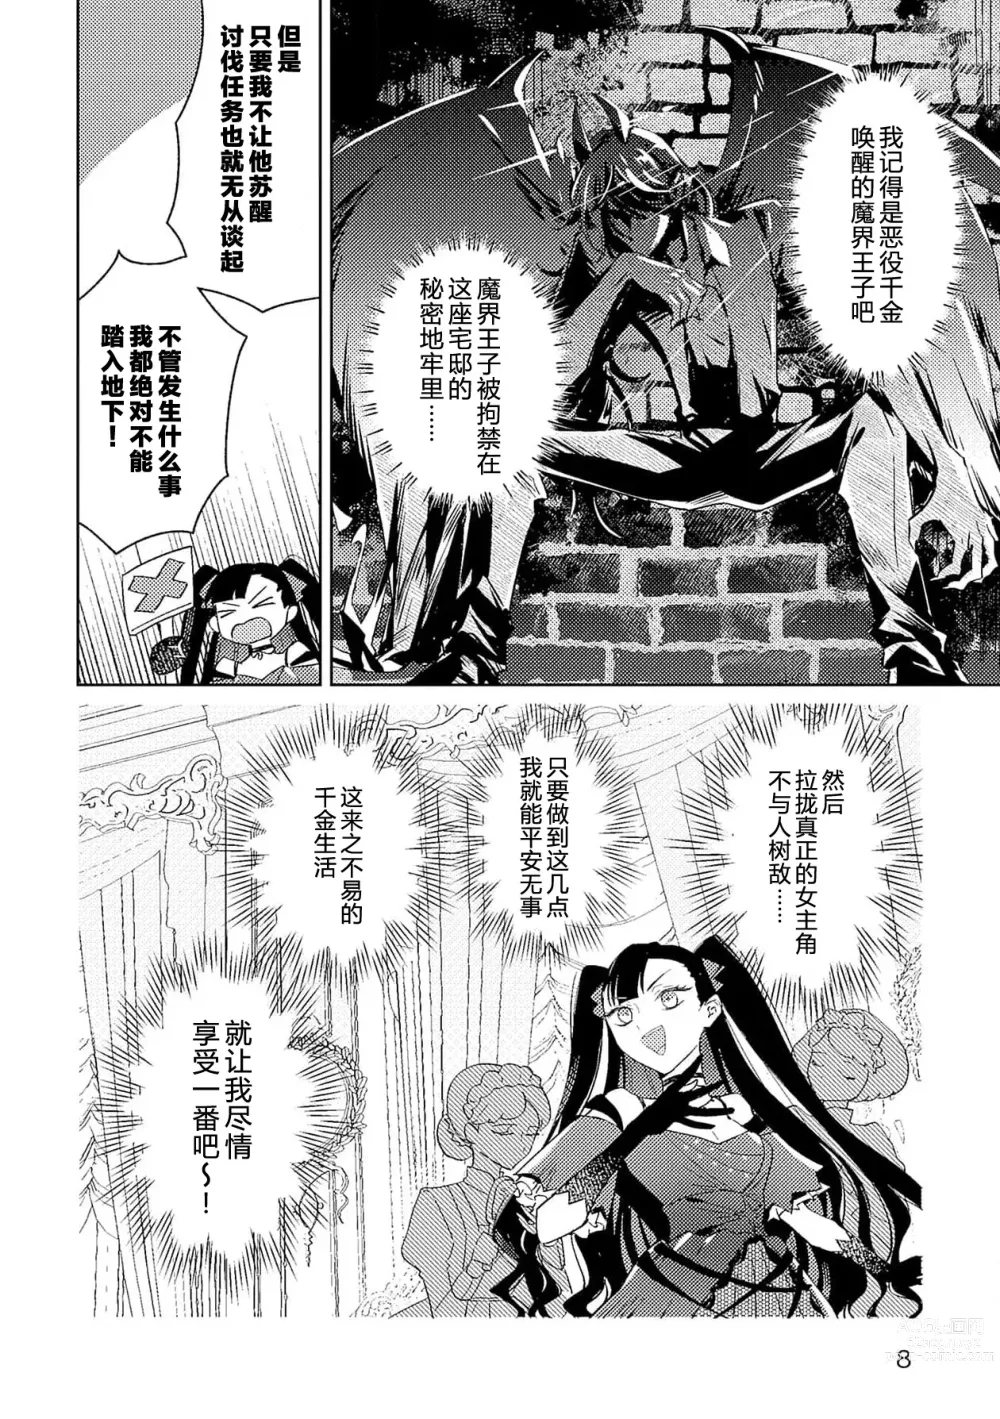 Page 8 of manga 身为恶役千金，堕落于魔界王子身下这条路线真的可以有？ 1-4